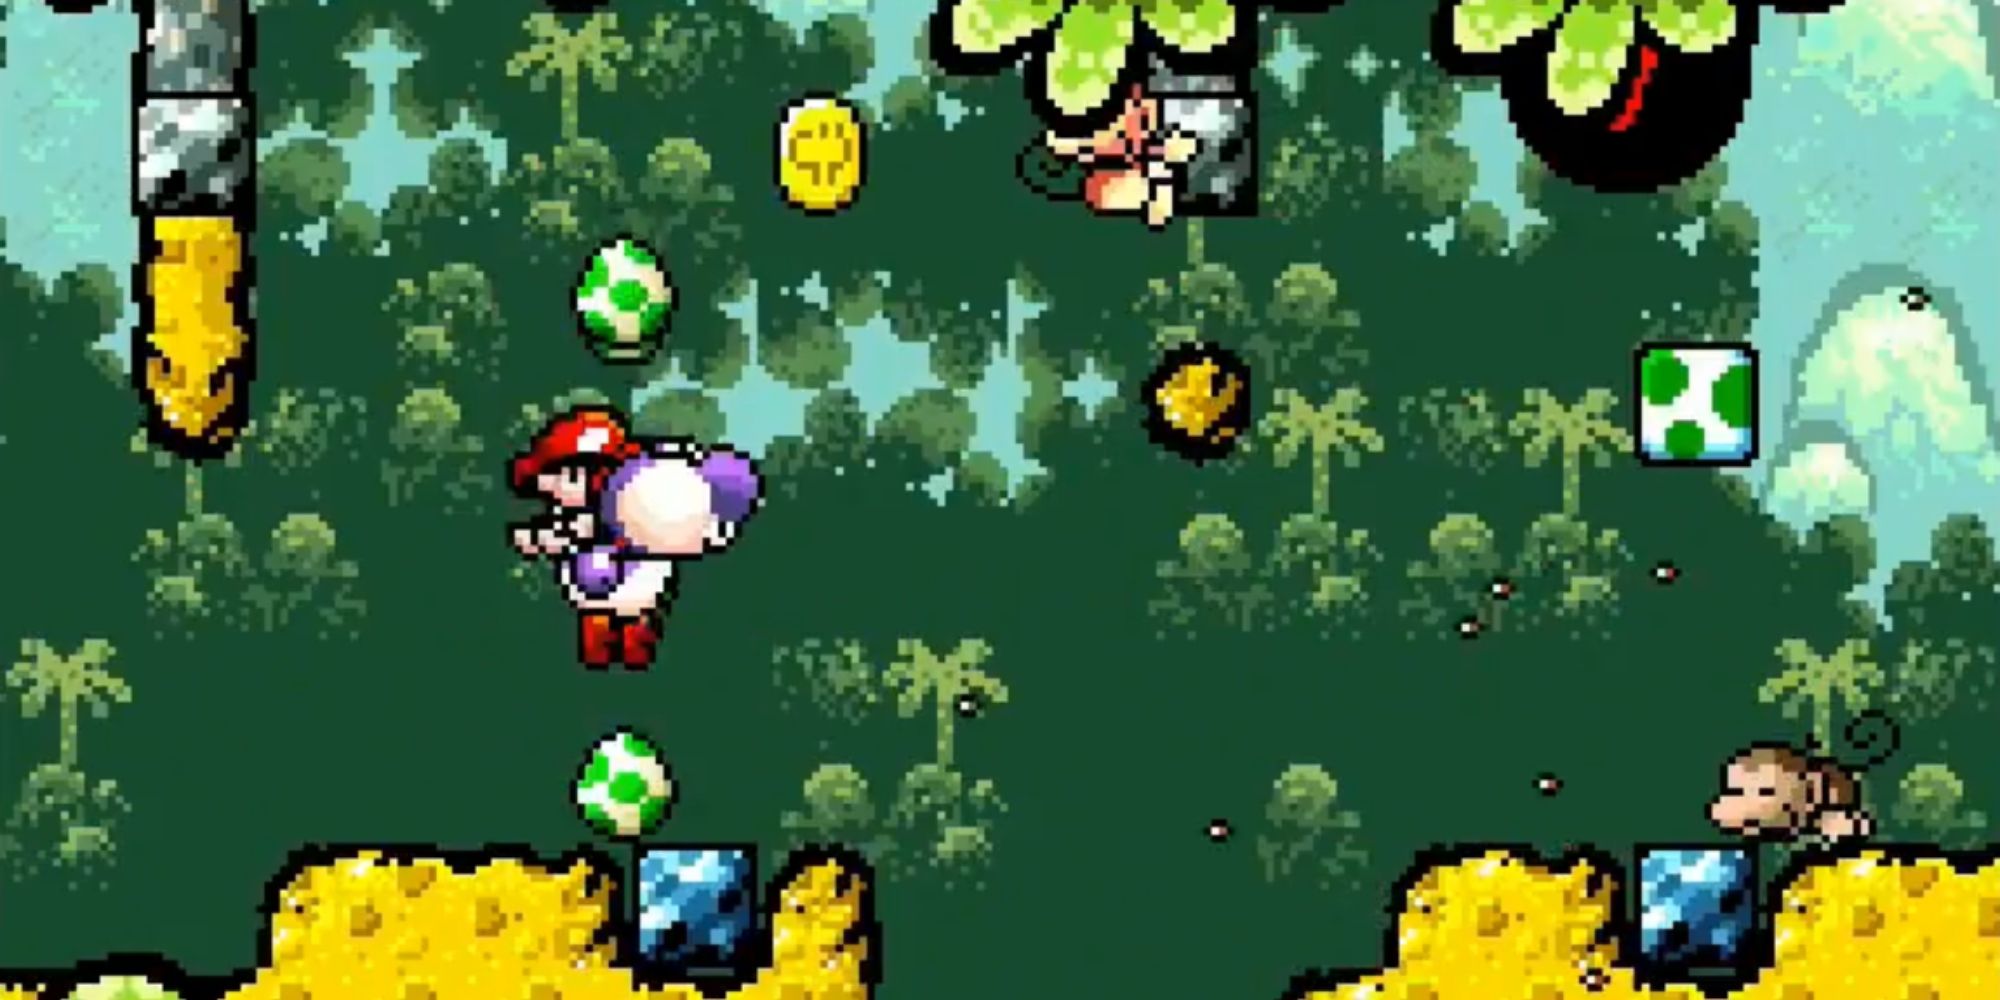 Purple Yoshi carrying Mario in mid-air